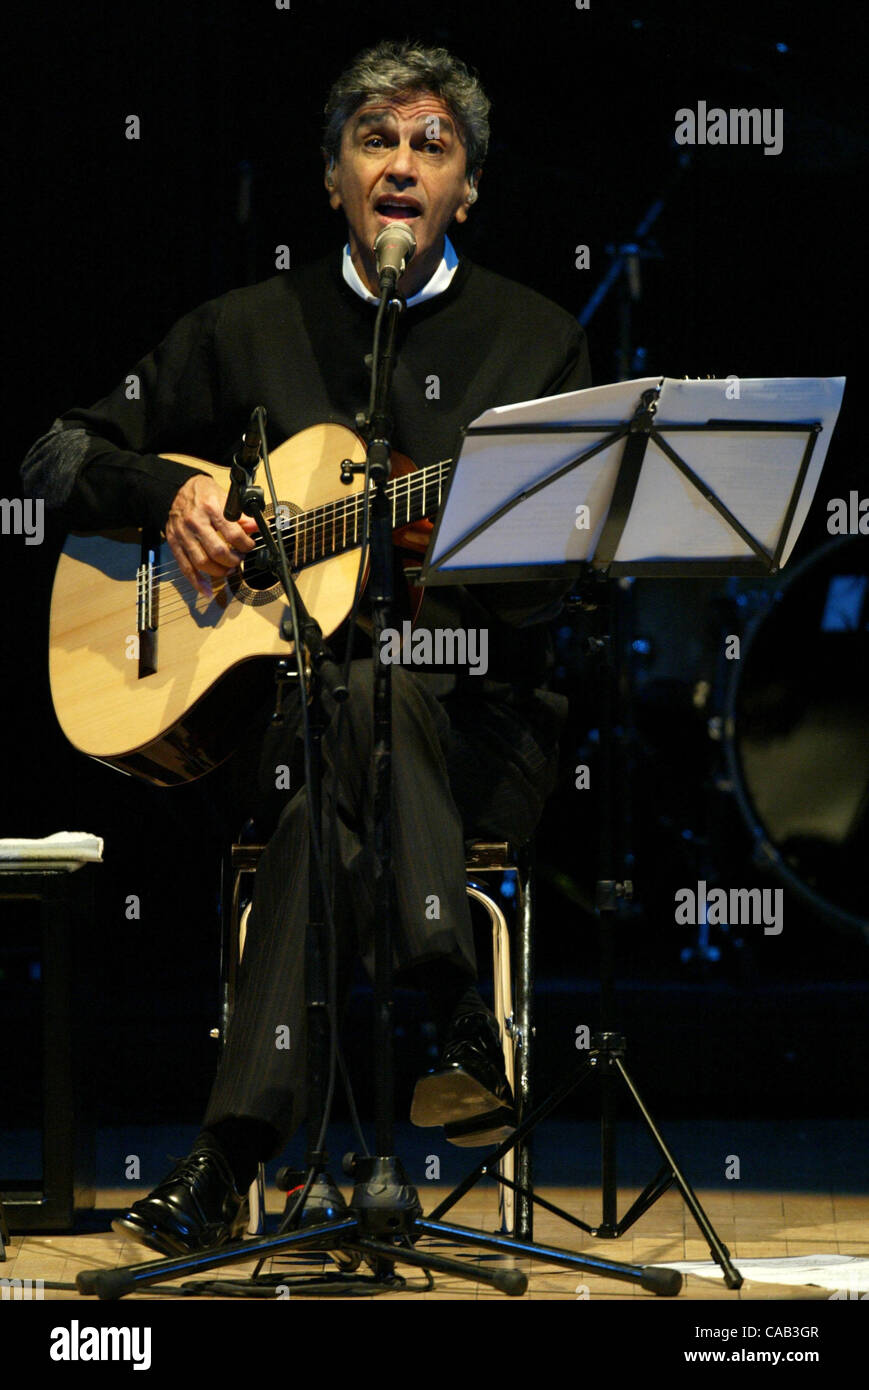 Brazilian music legend singer/songwriter Caetano Veloso performing at the Carnegie Hall on April, 16 2004 in Manhattan. Photo Credit: Mariela Lombard/ZUMA Press. Stock Photo